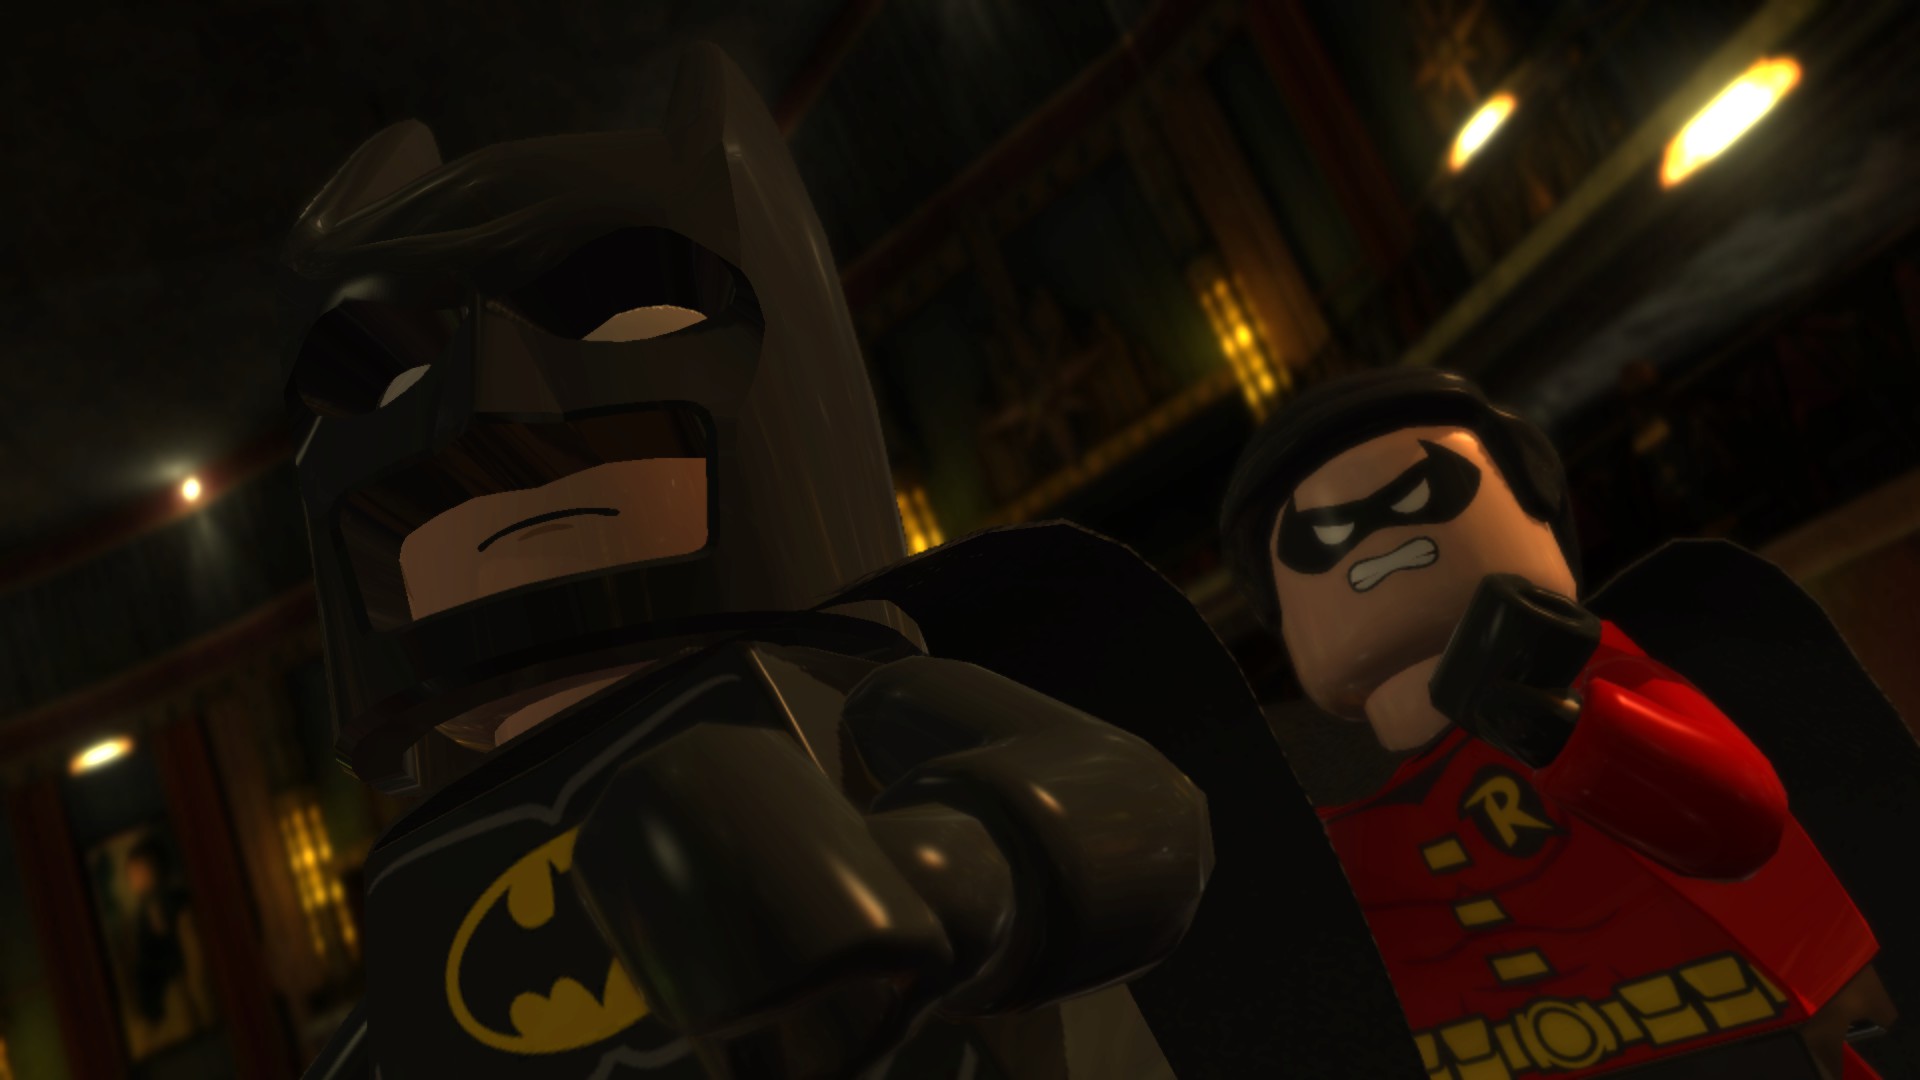 lego batman 2 harley quinn and joker